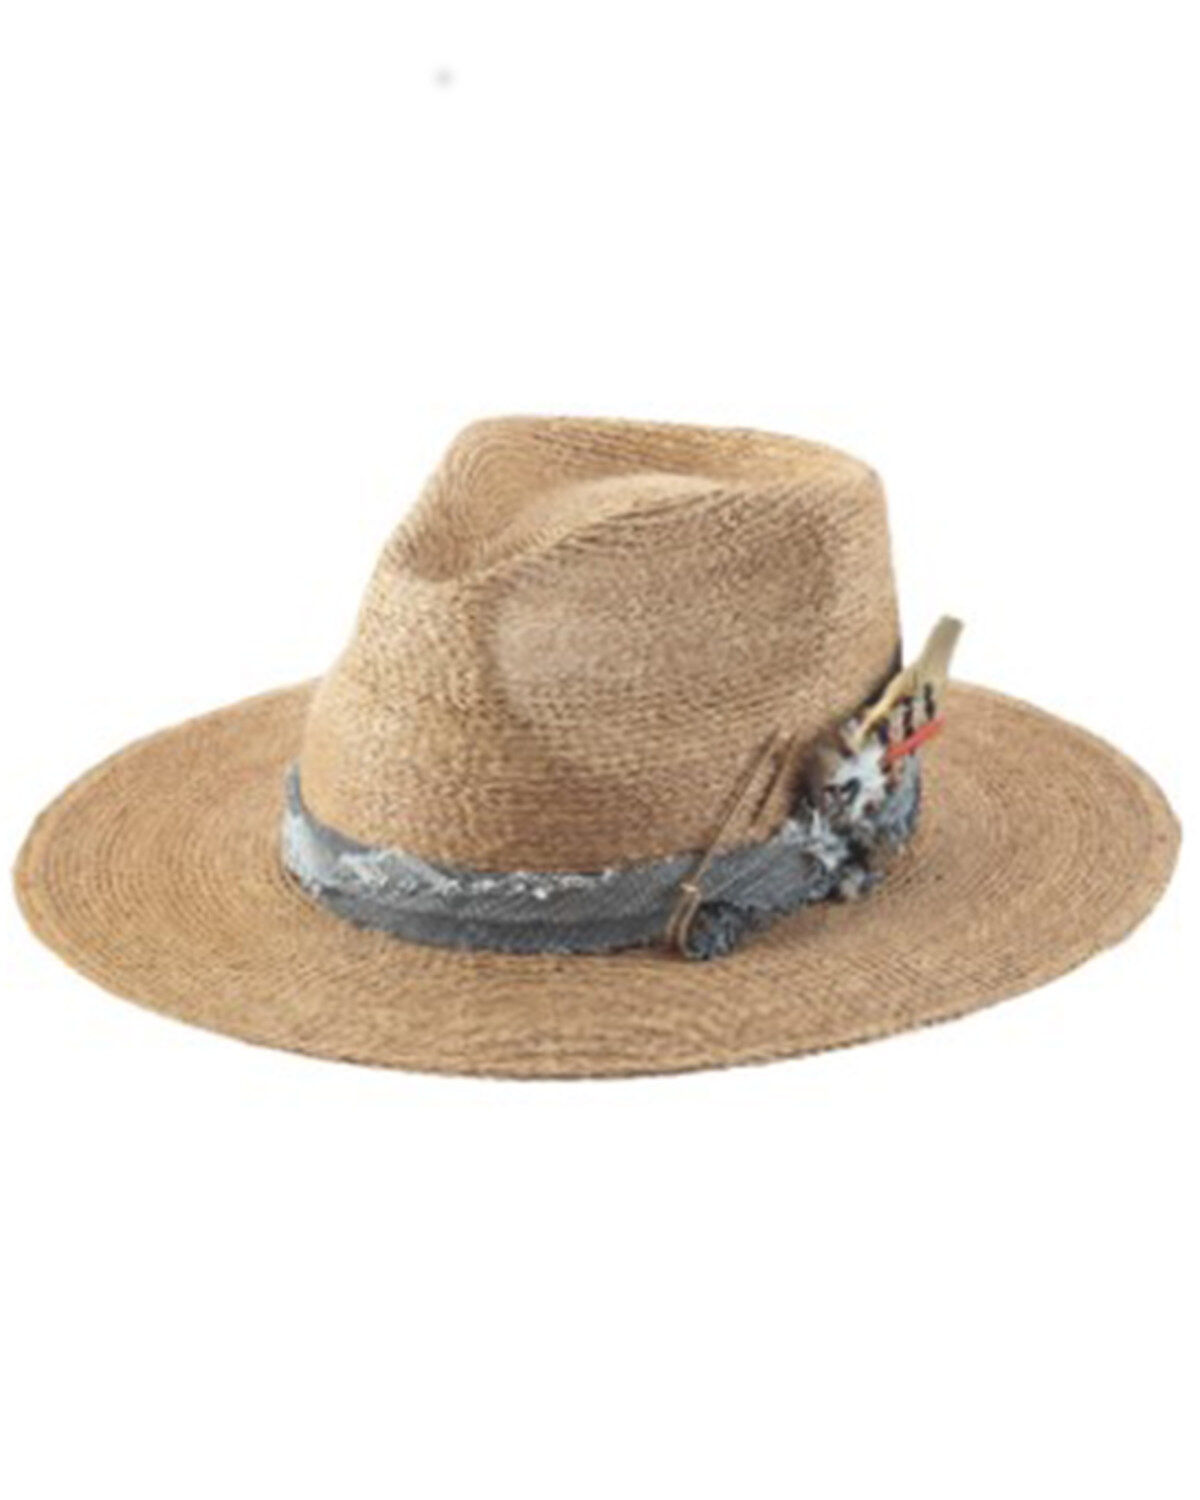 Bullhide Hats 2839 Run A Muck Cowboy Collection Rockin Bull Natural Cowboy Hat 